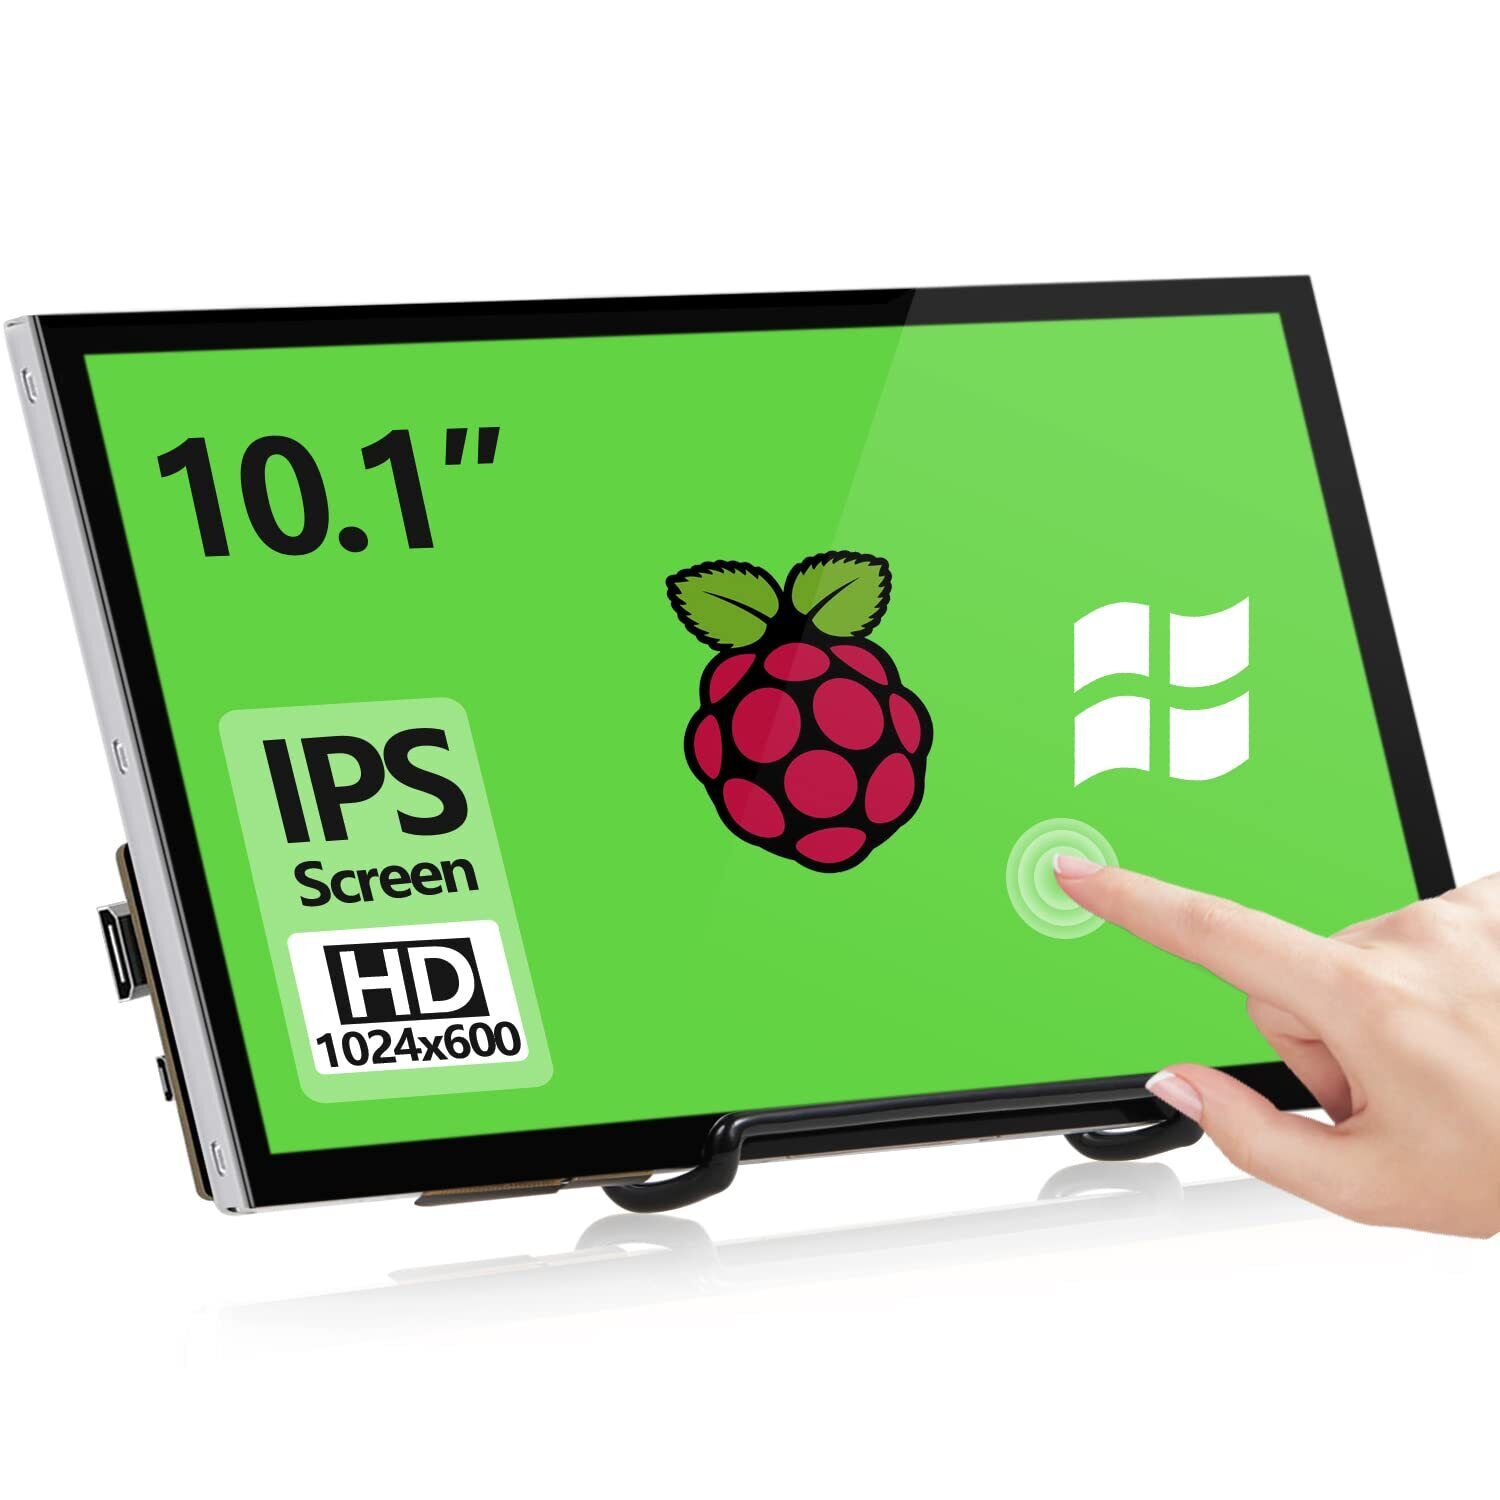 HAMTYSAN Raspberry Pi Screen, 10.1 Inch Touchscreen Monitor 1024x600 Small HD...